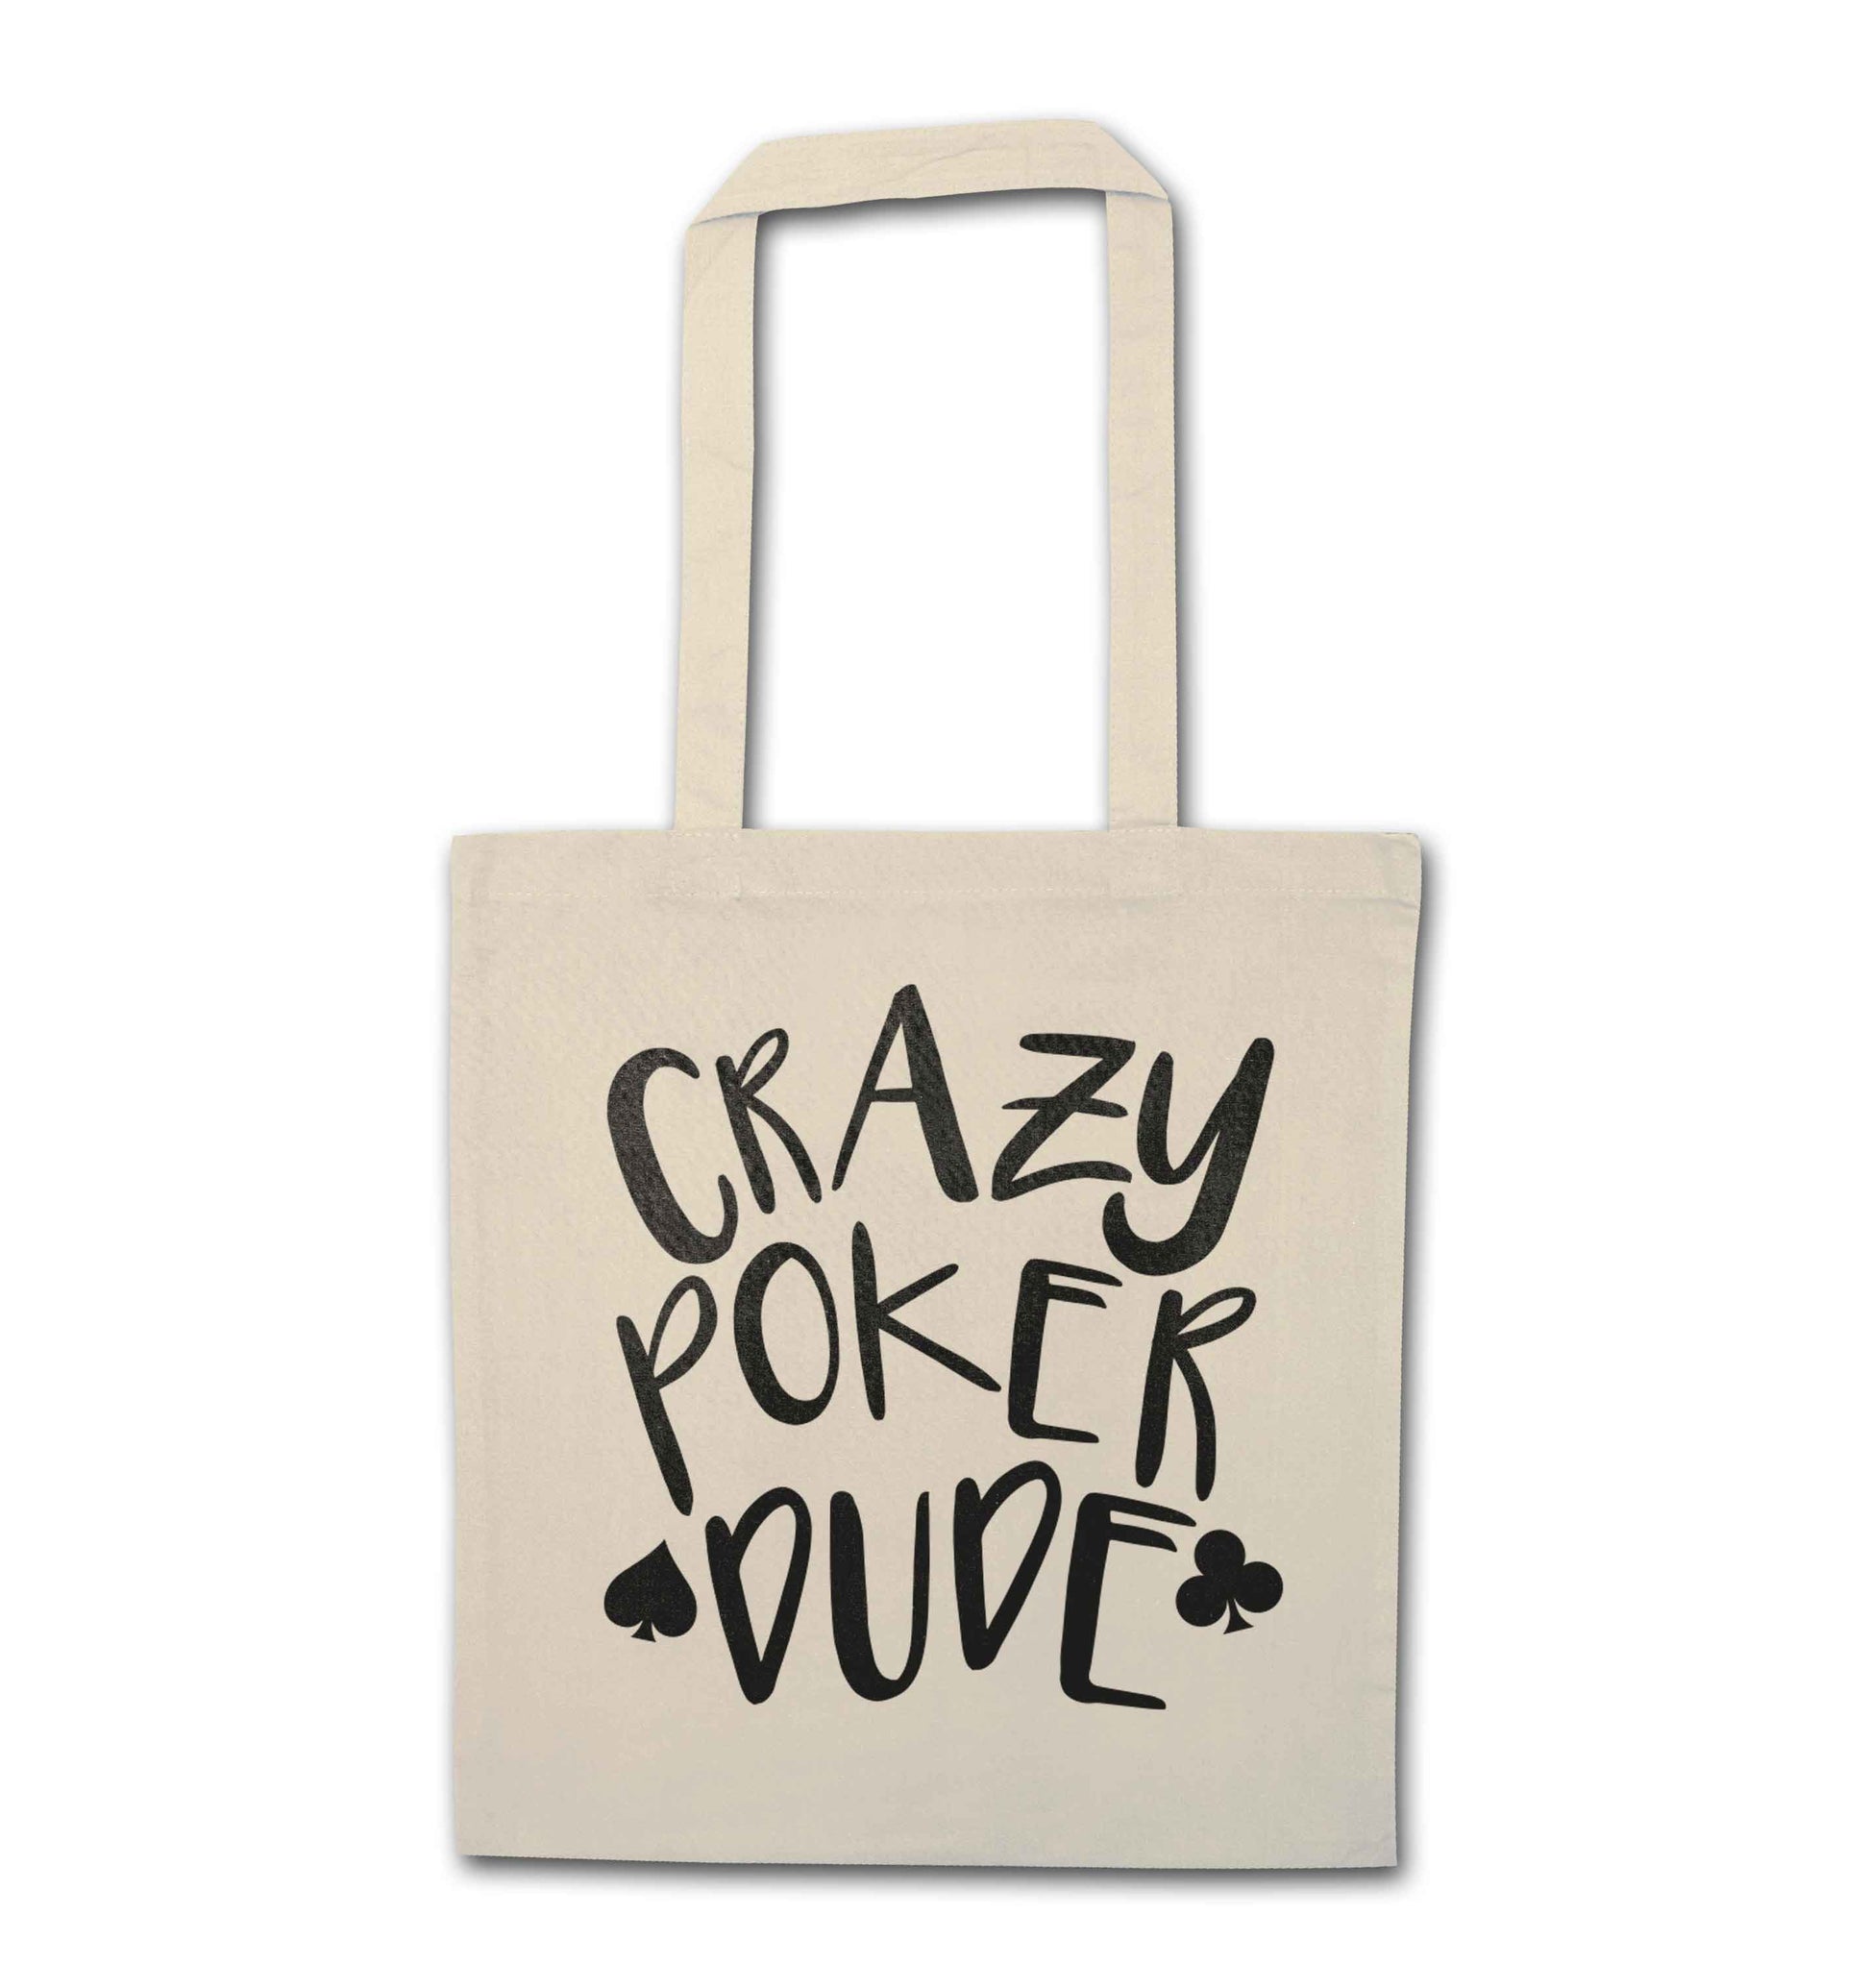 Crazy poker dude natural tote bag